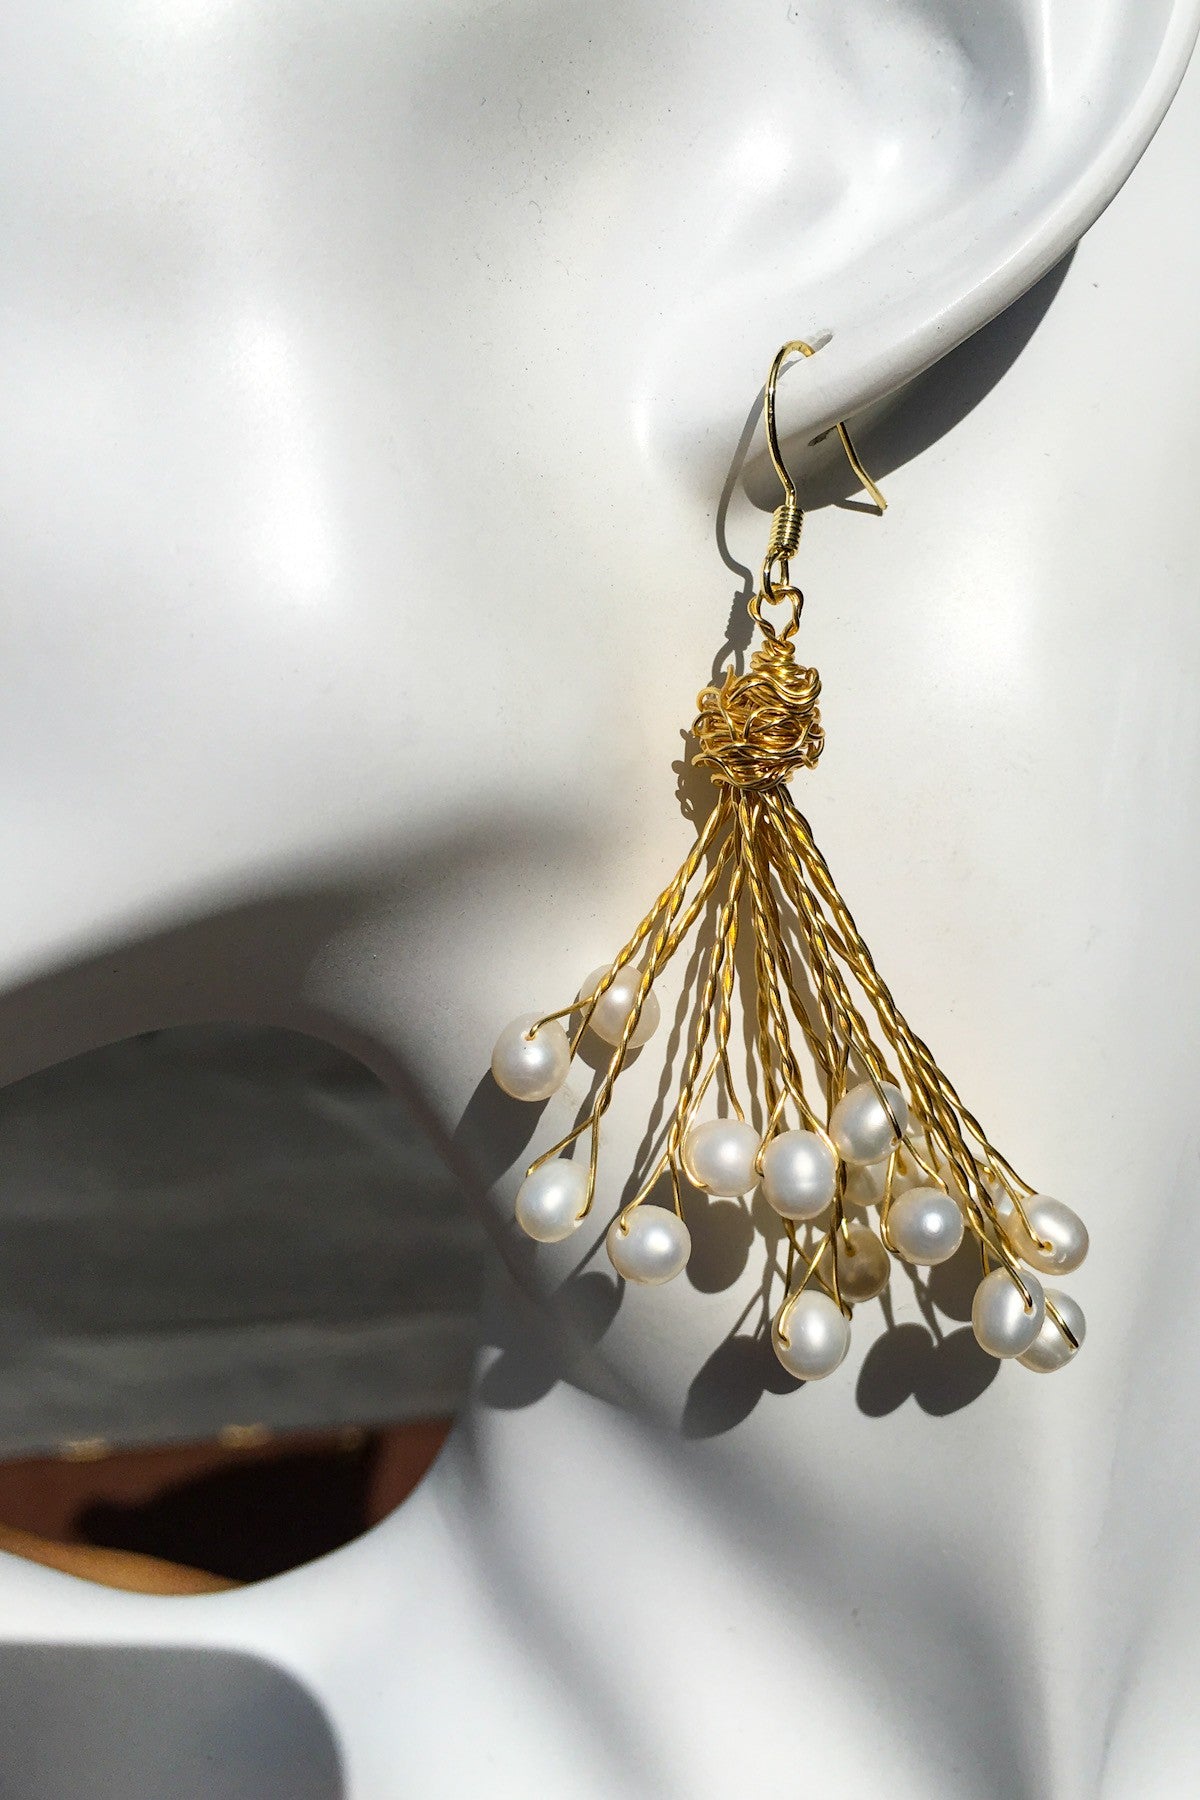 SKYE San Francisco Shop SF Chic Modern Elegant Classy Women Jewelry French Parisian Minimalist Francine 18K Gold Freshwater Pearl Earrings 3